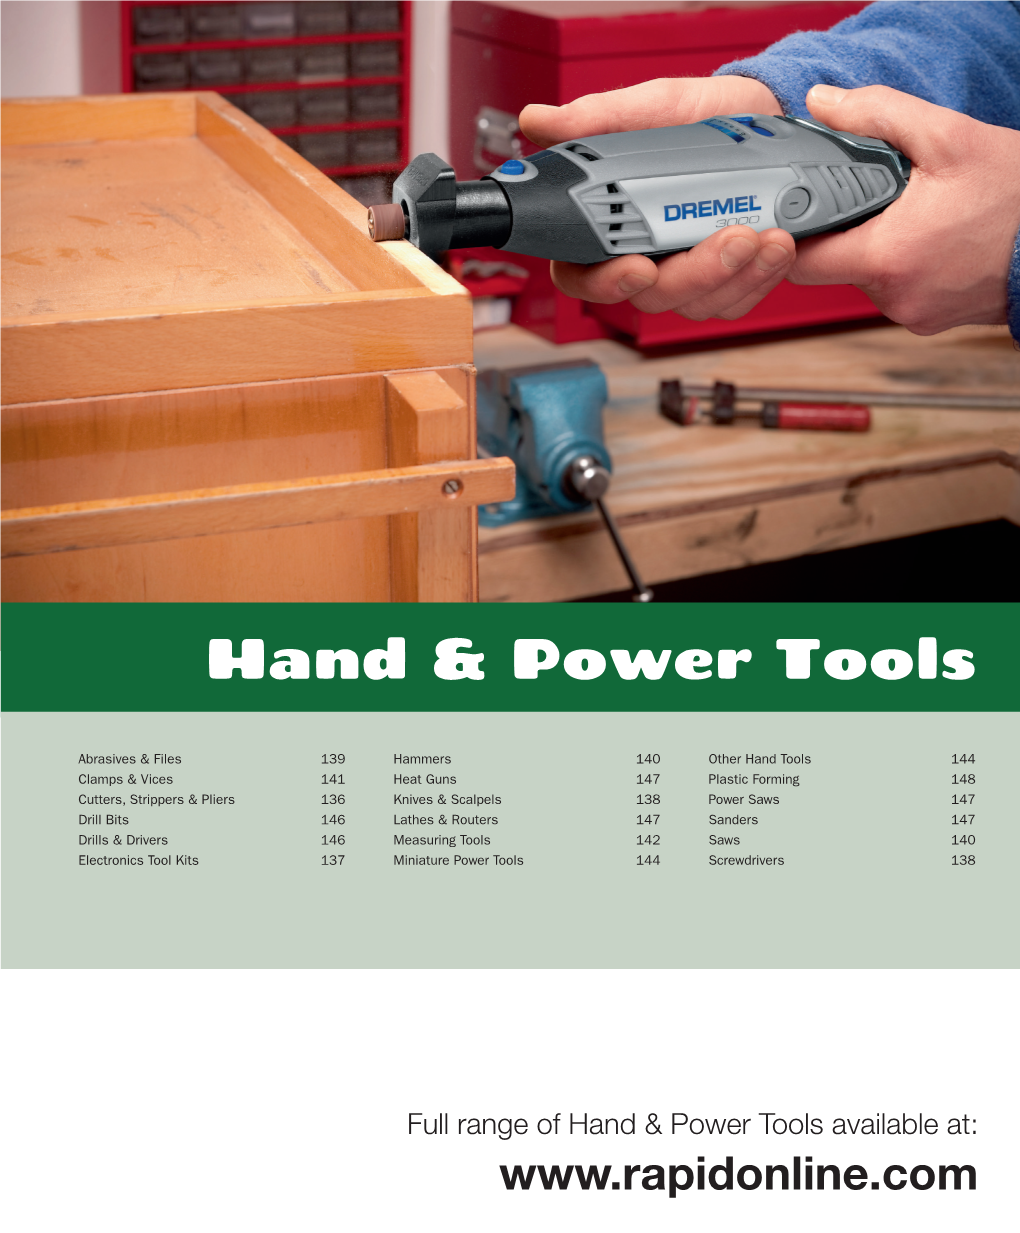 Hand & Power Tools